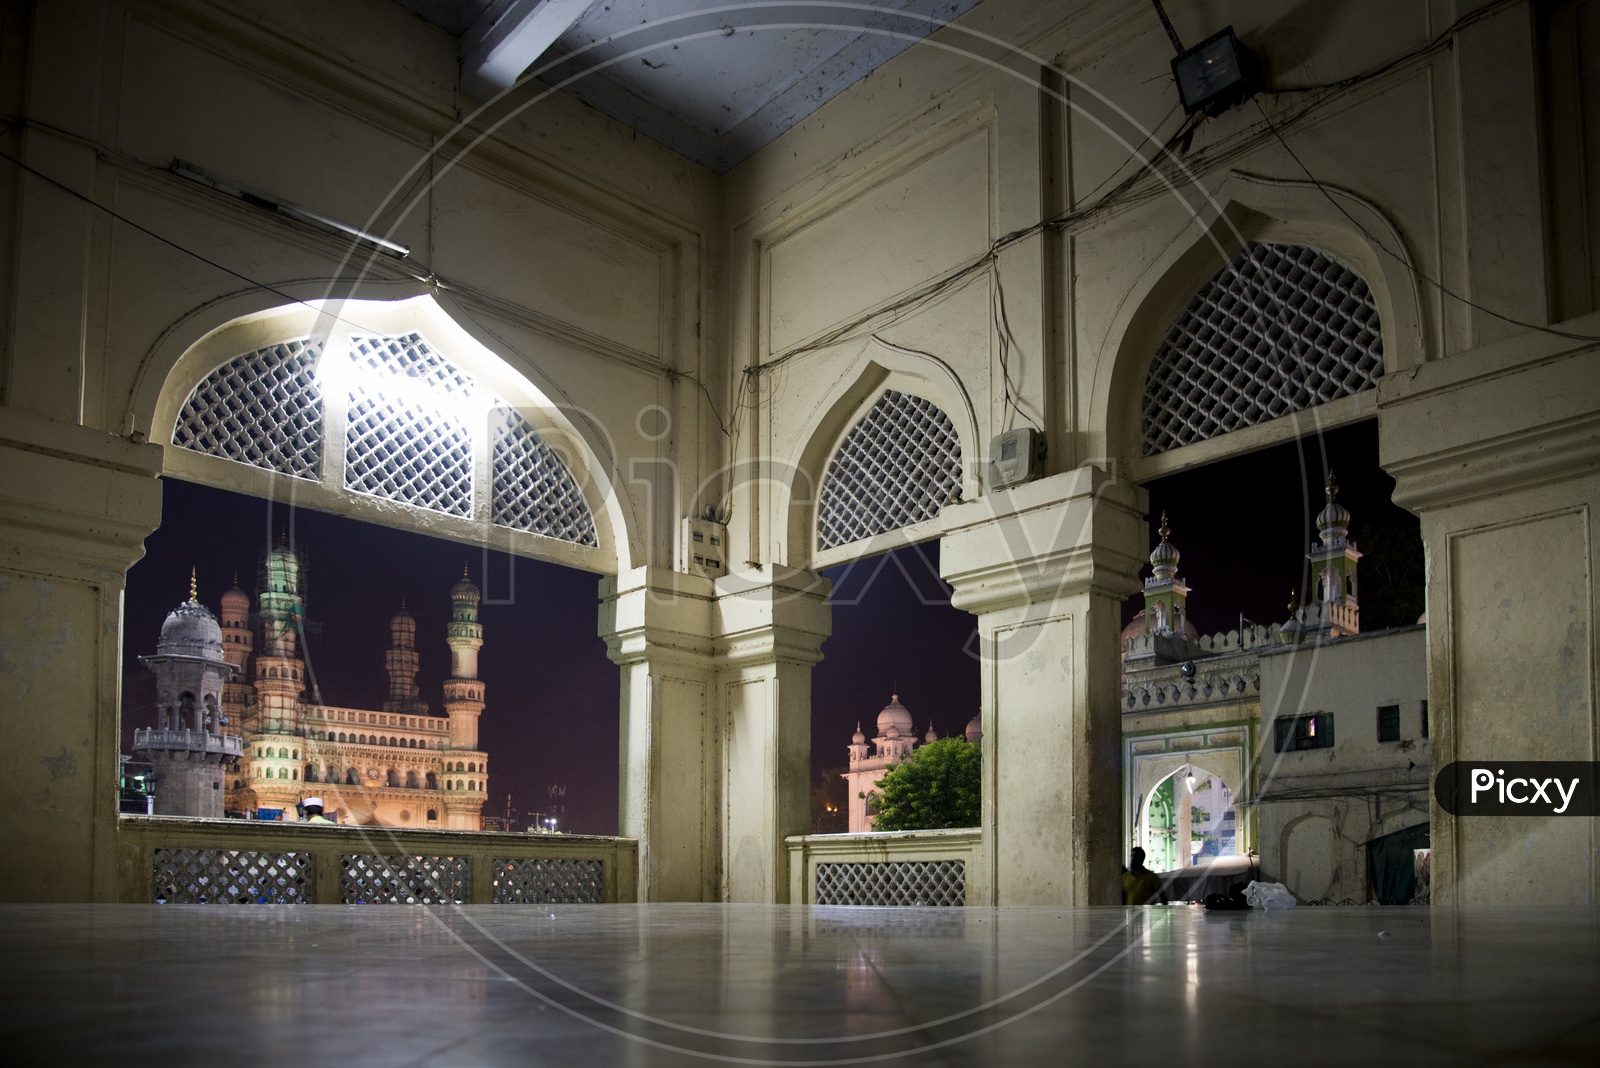 Mecca Masjid, Hyderabad